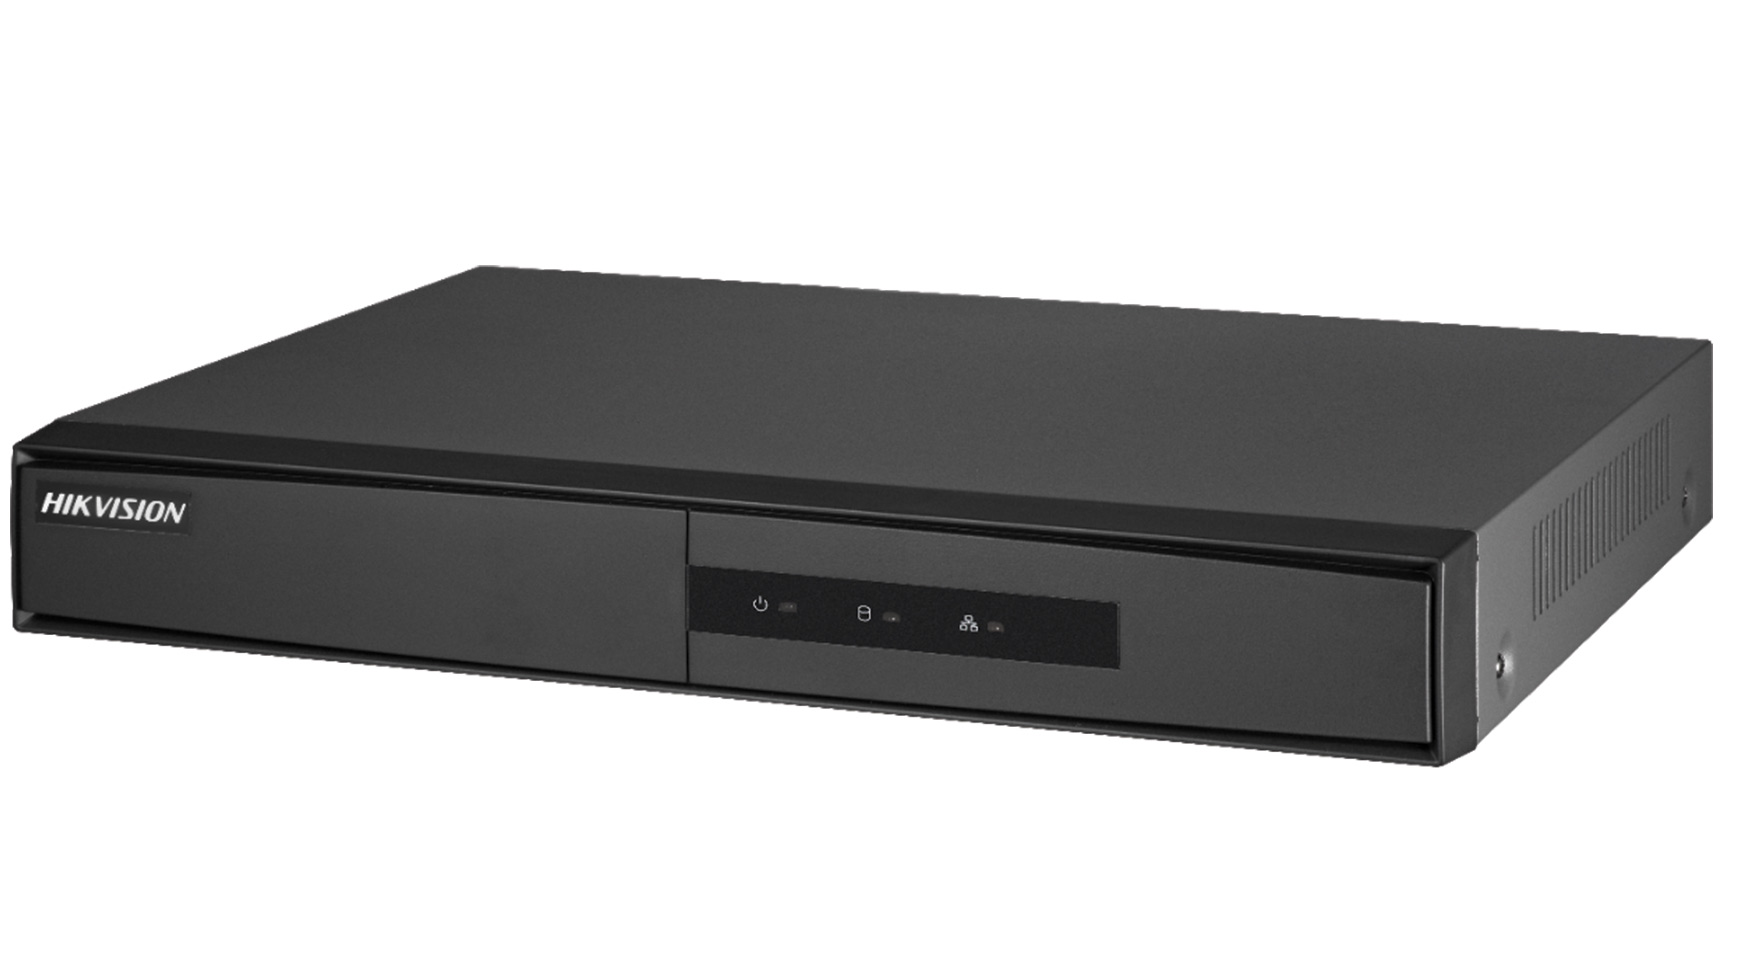 Hikvision DS-7208HGHI-F2 - Turbo HD video snimač sa 8 analogna kanala i 2 dodatna IP kanala do rezolucije 1080p.